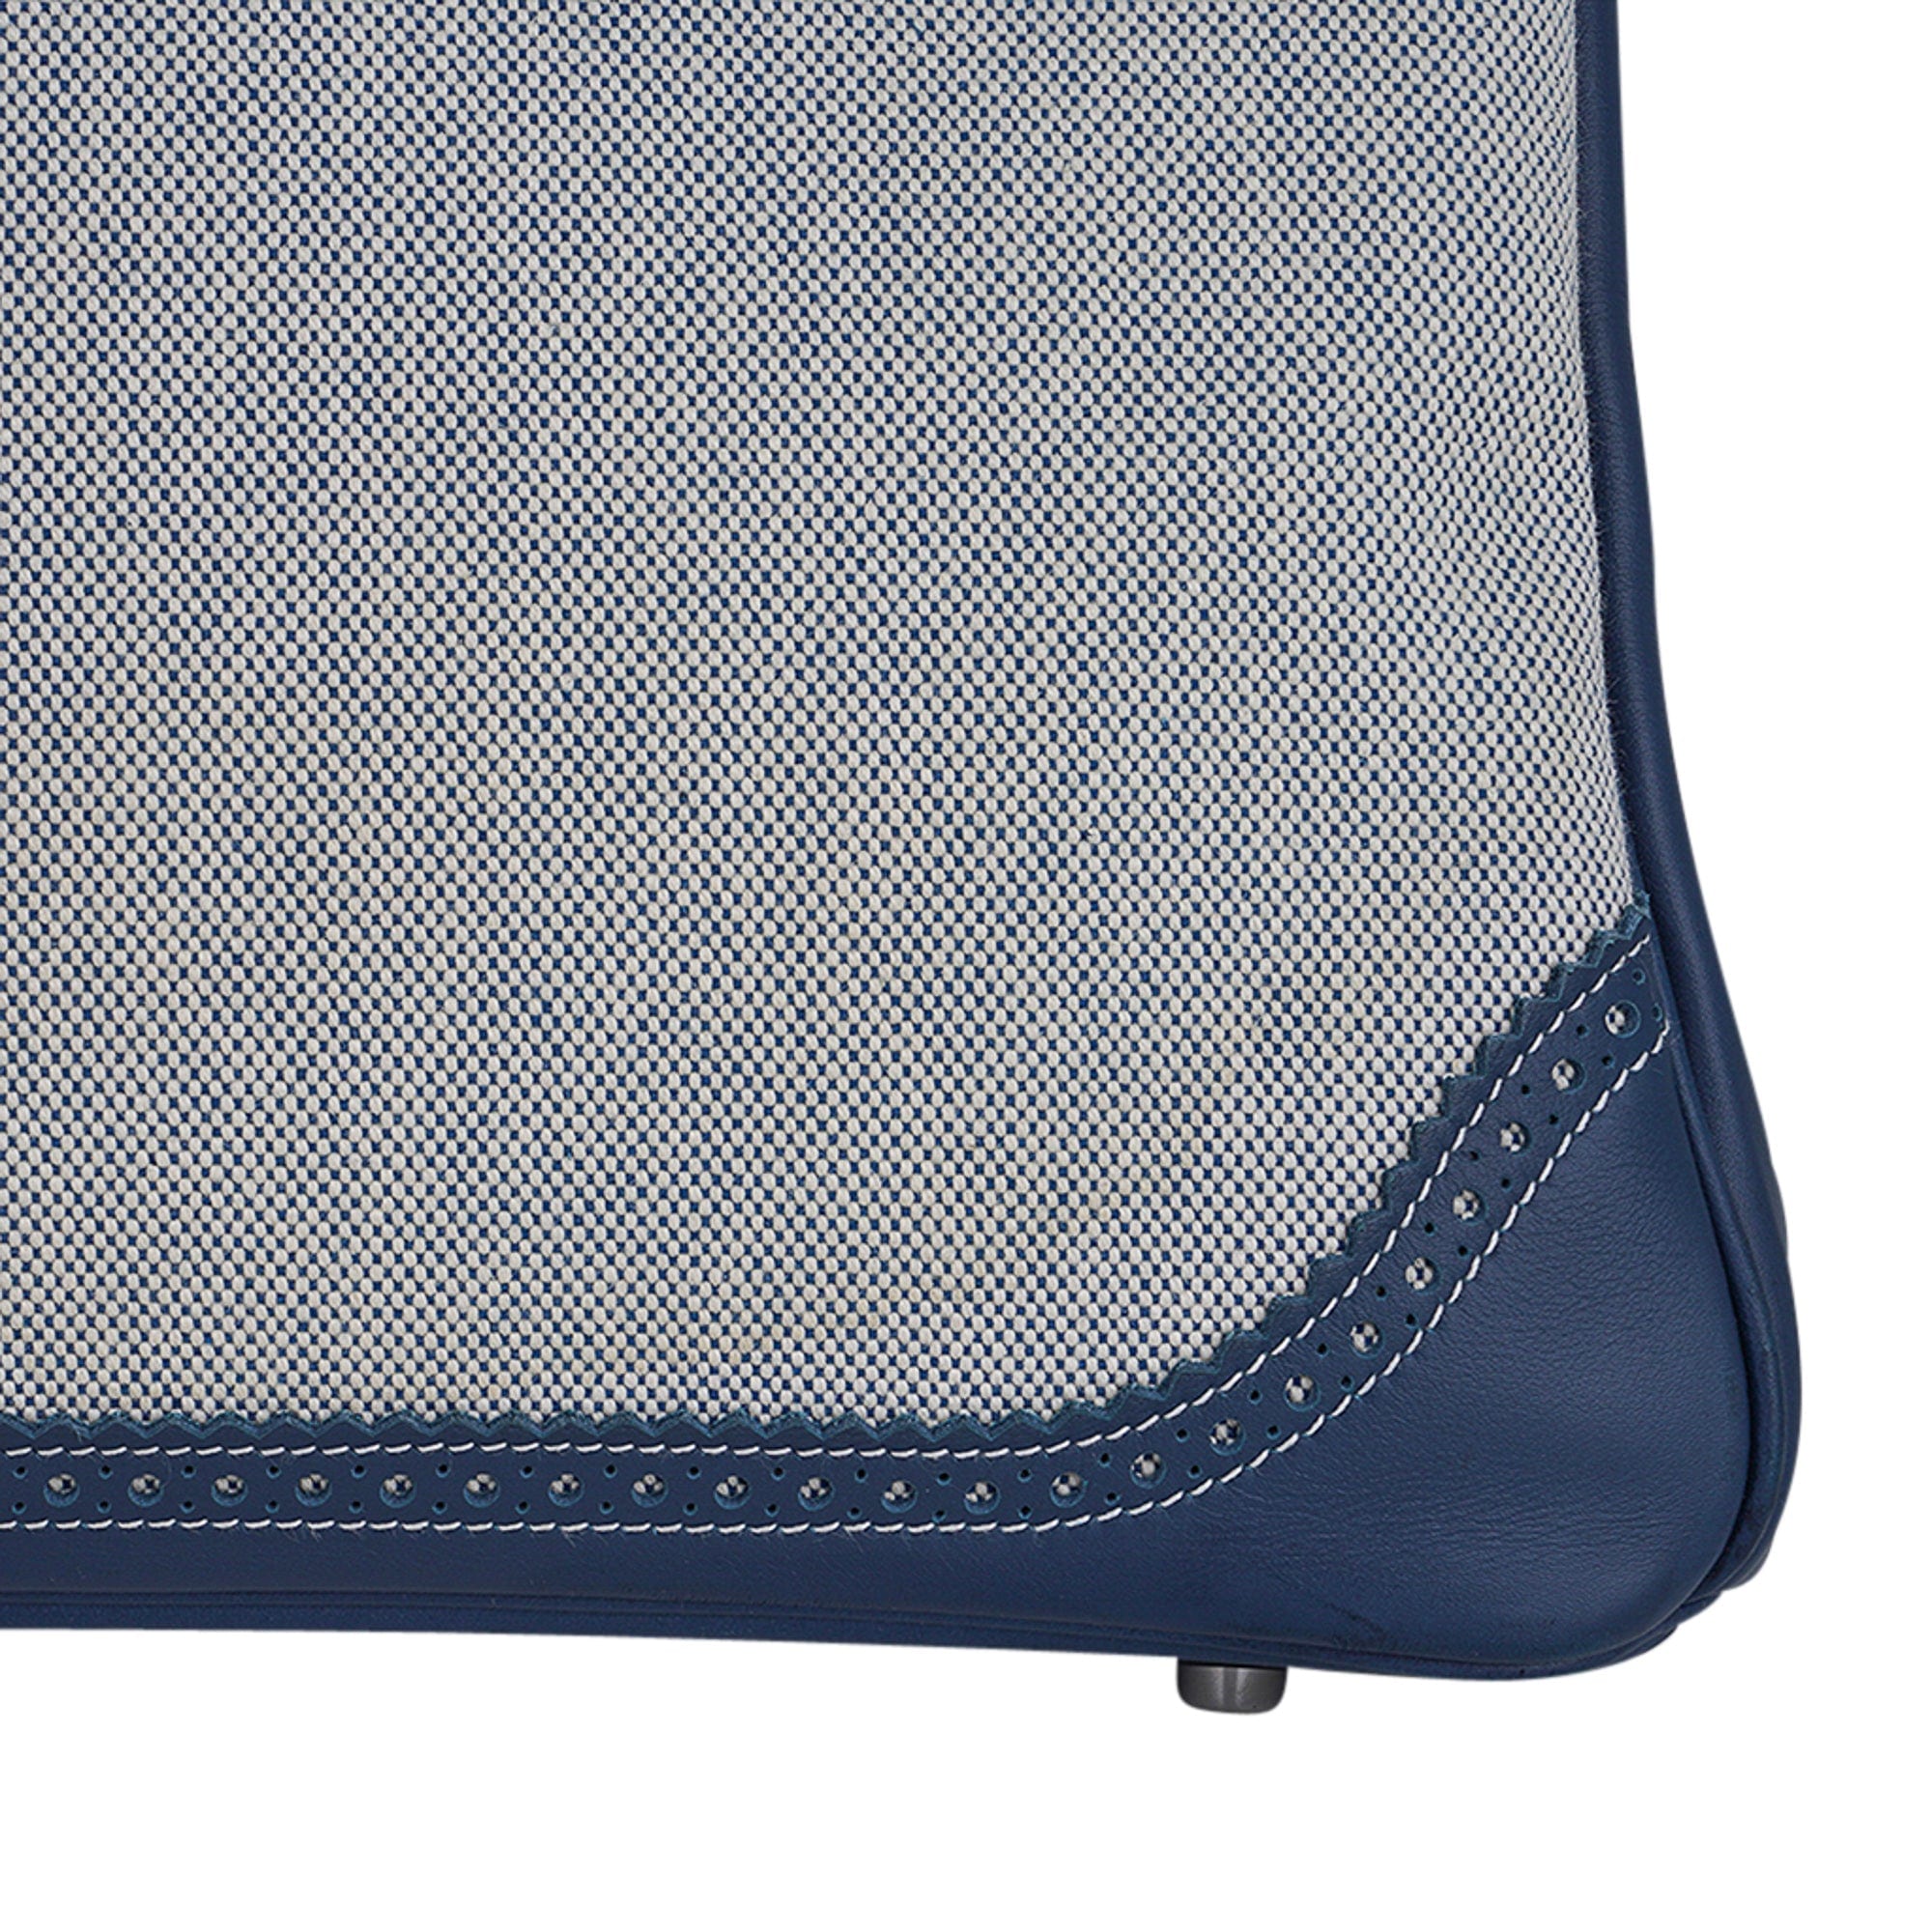 Hermes Birkin Limited Edition 40 Ghillies Bag Blue de Prusse Blue Toile with Palladium Hardware